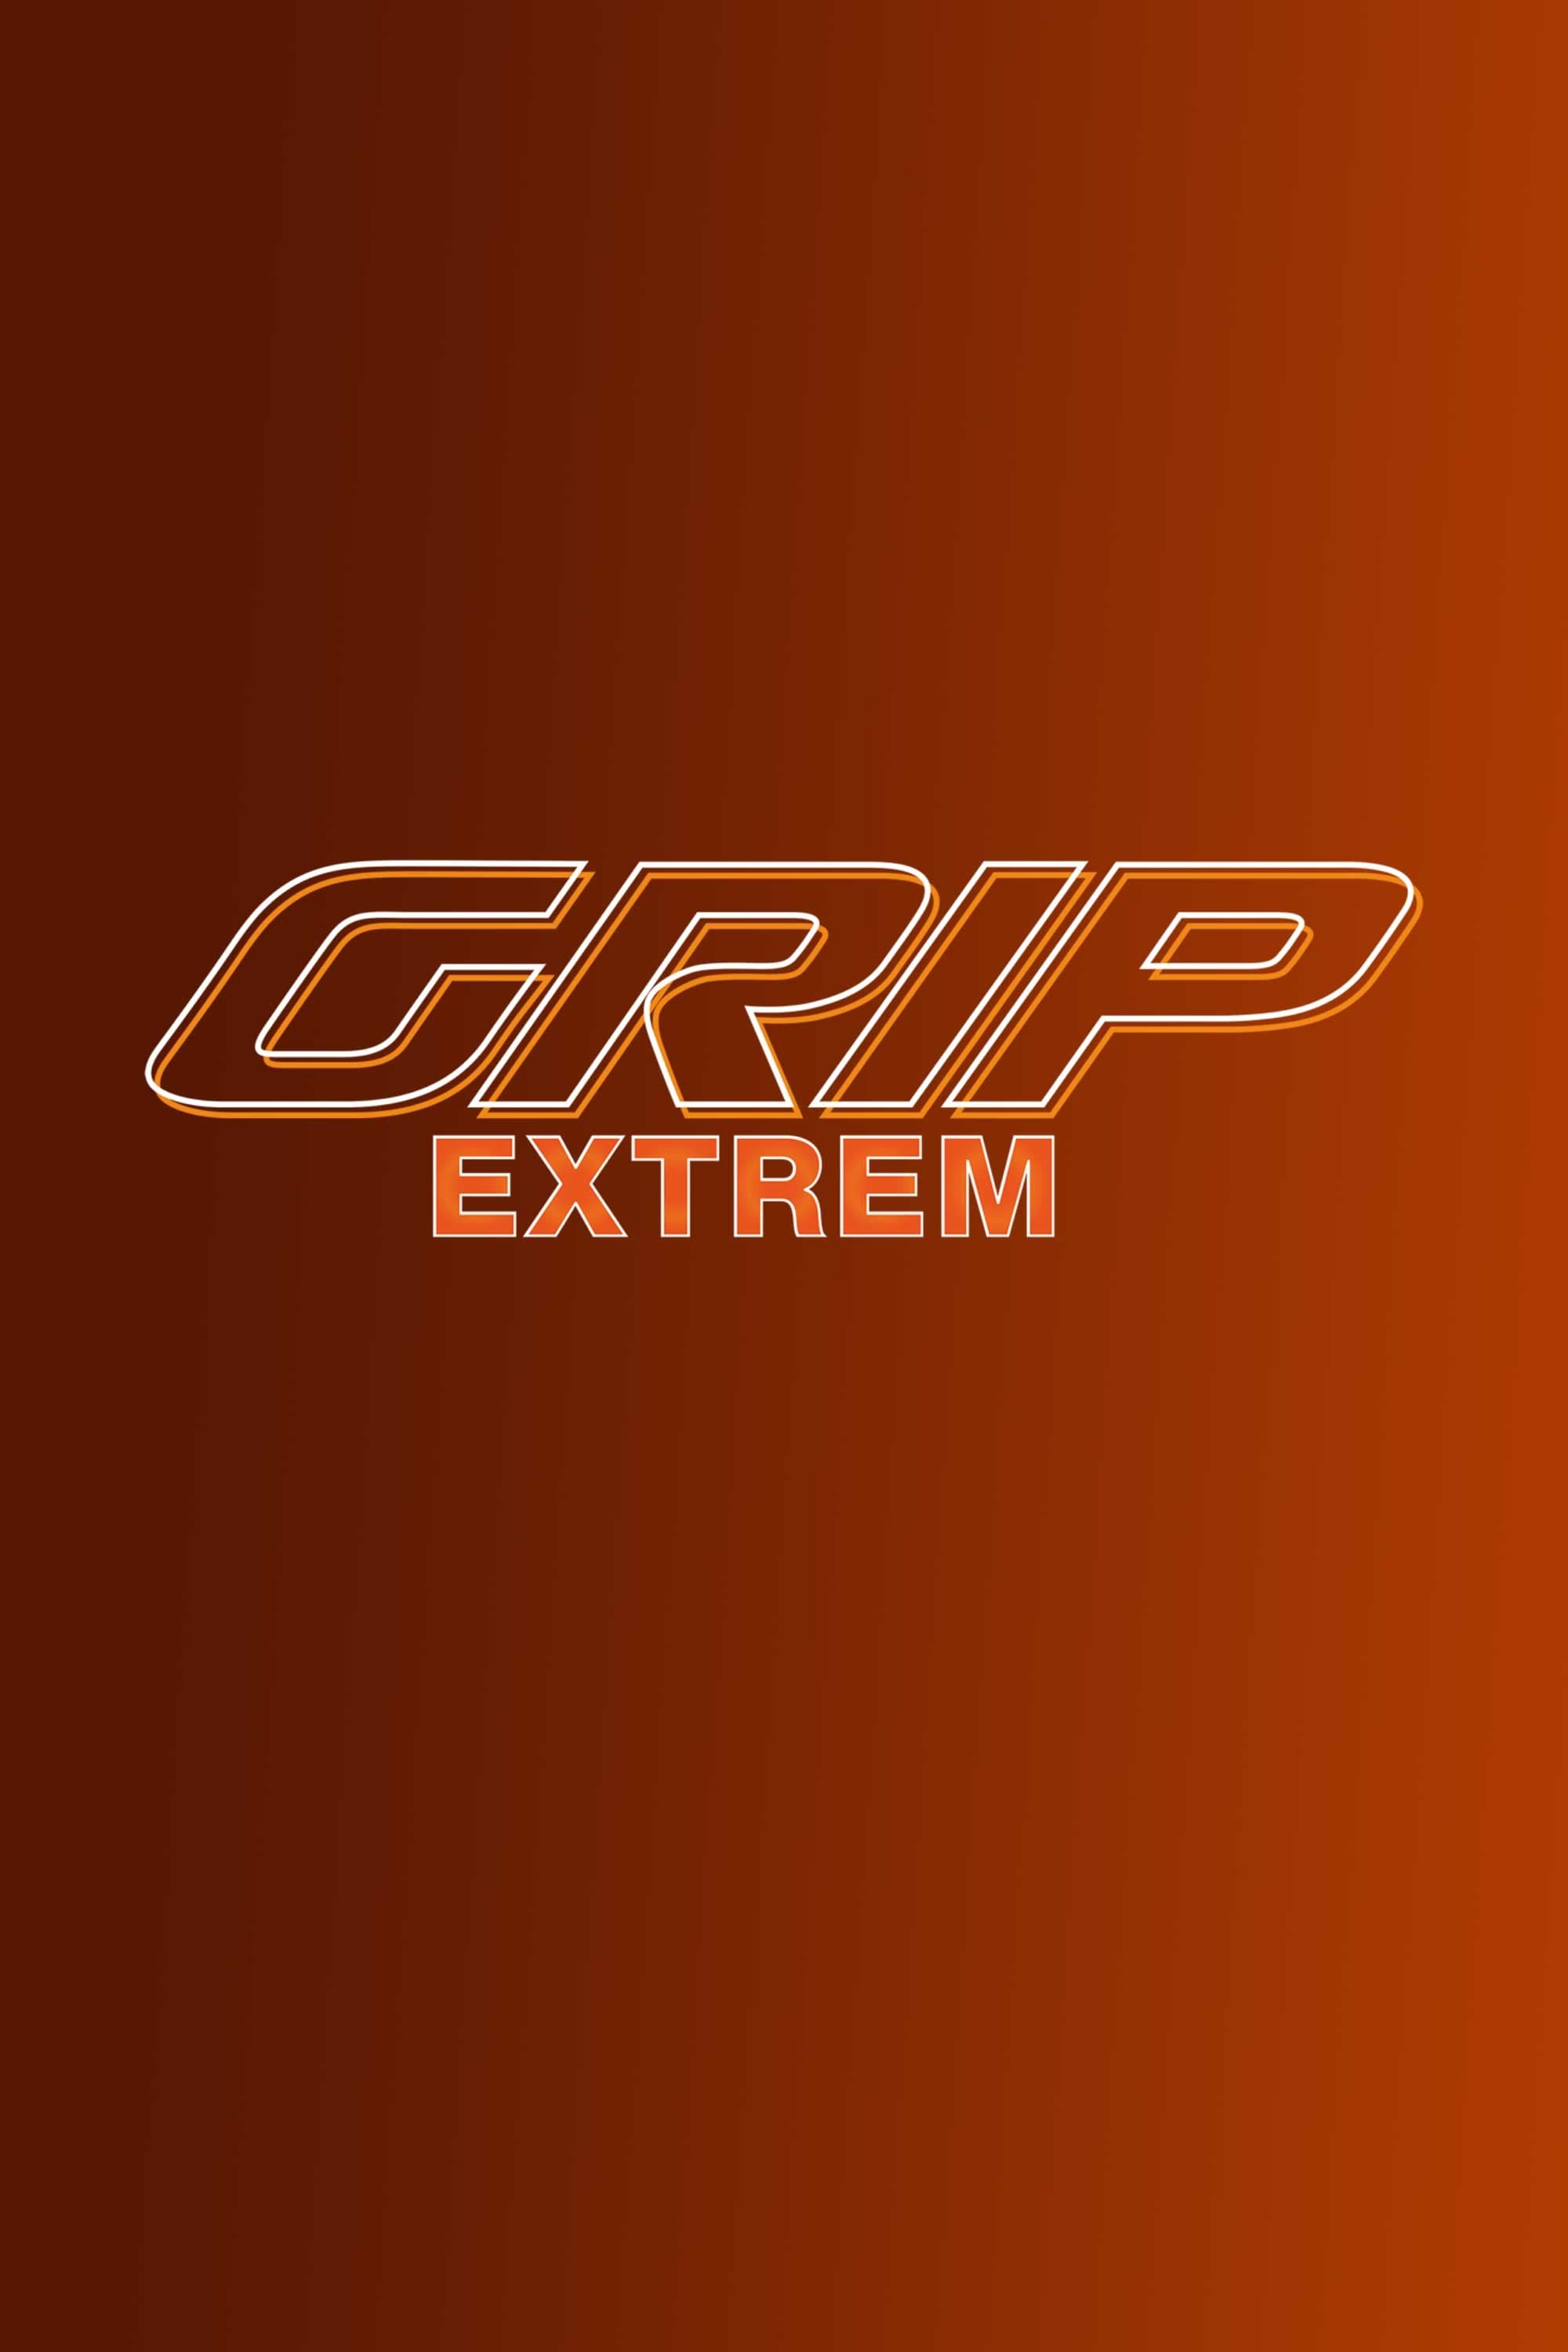 GRIP EXTREM